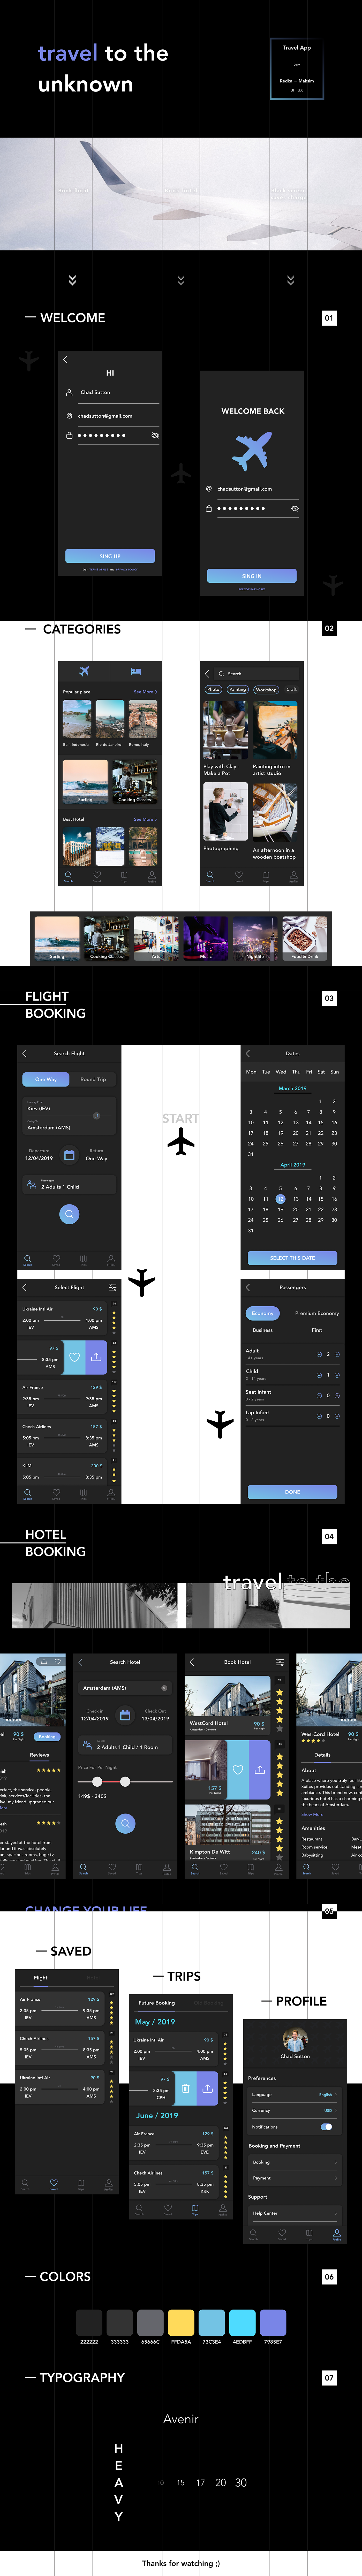 Travel UI ux Mobile app black flight discover Fun application design